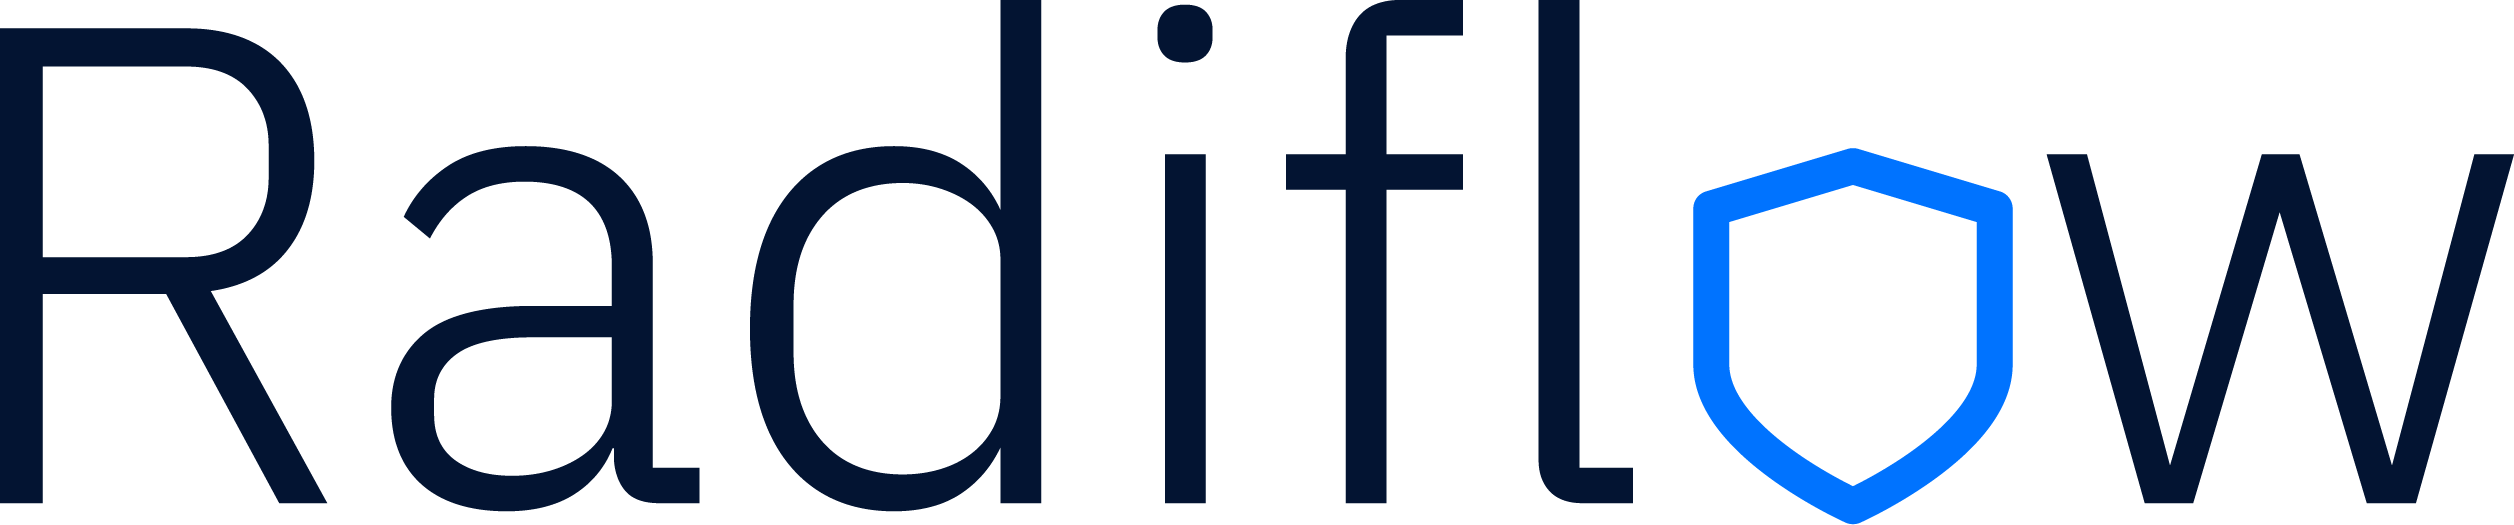 Radiflow Logo